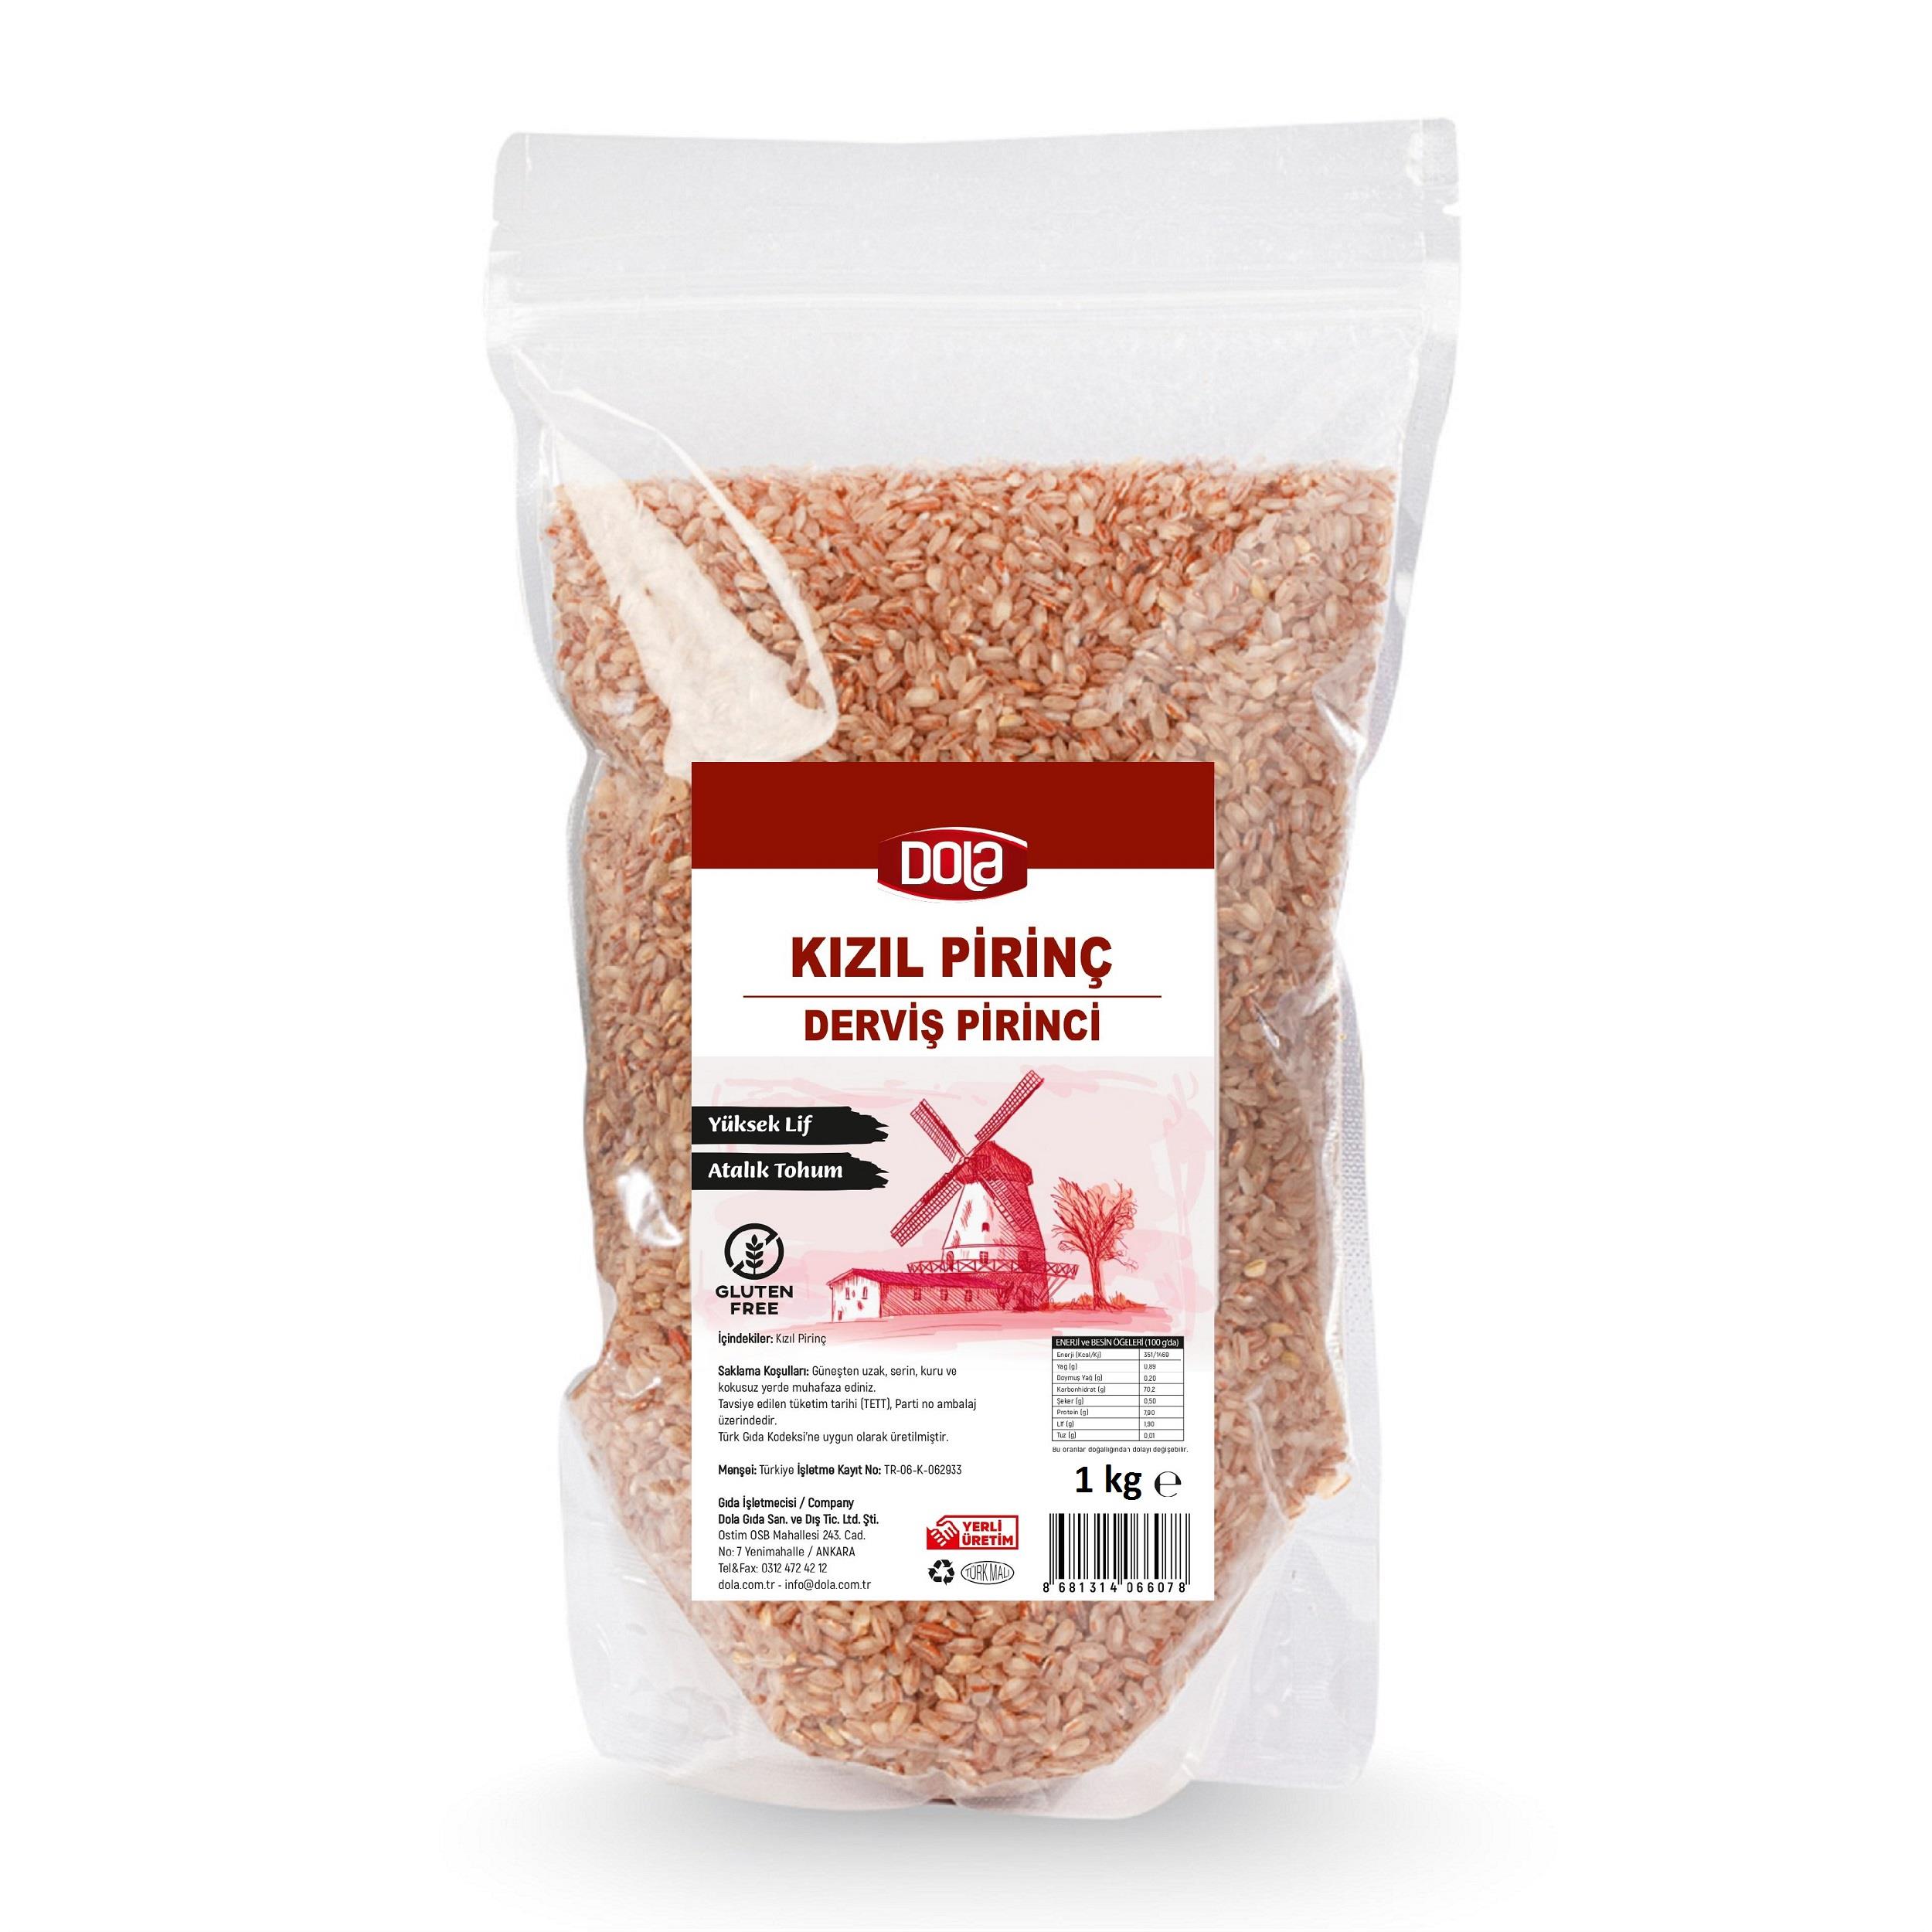 Dola Ata Tohum Derviş Pirinci Kızıl Pirinç 1 kg